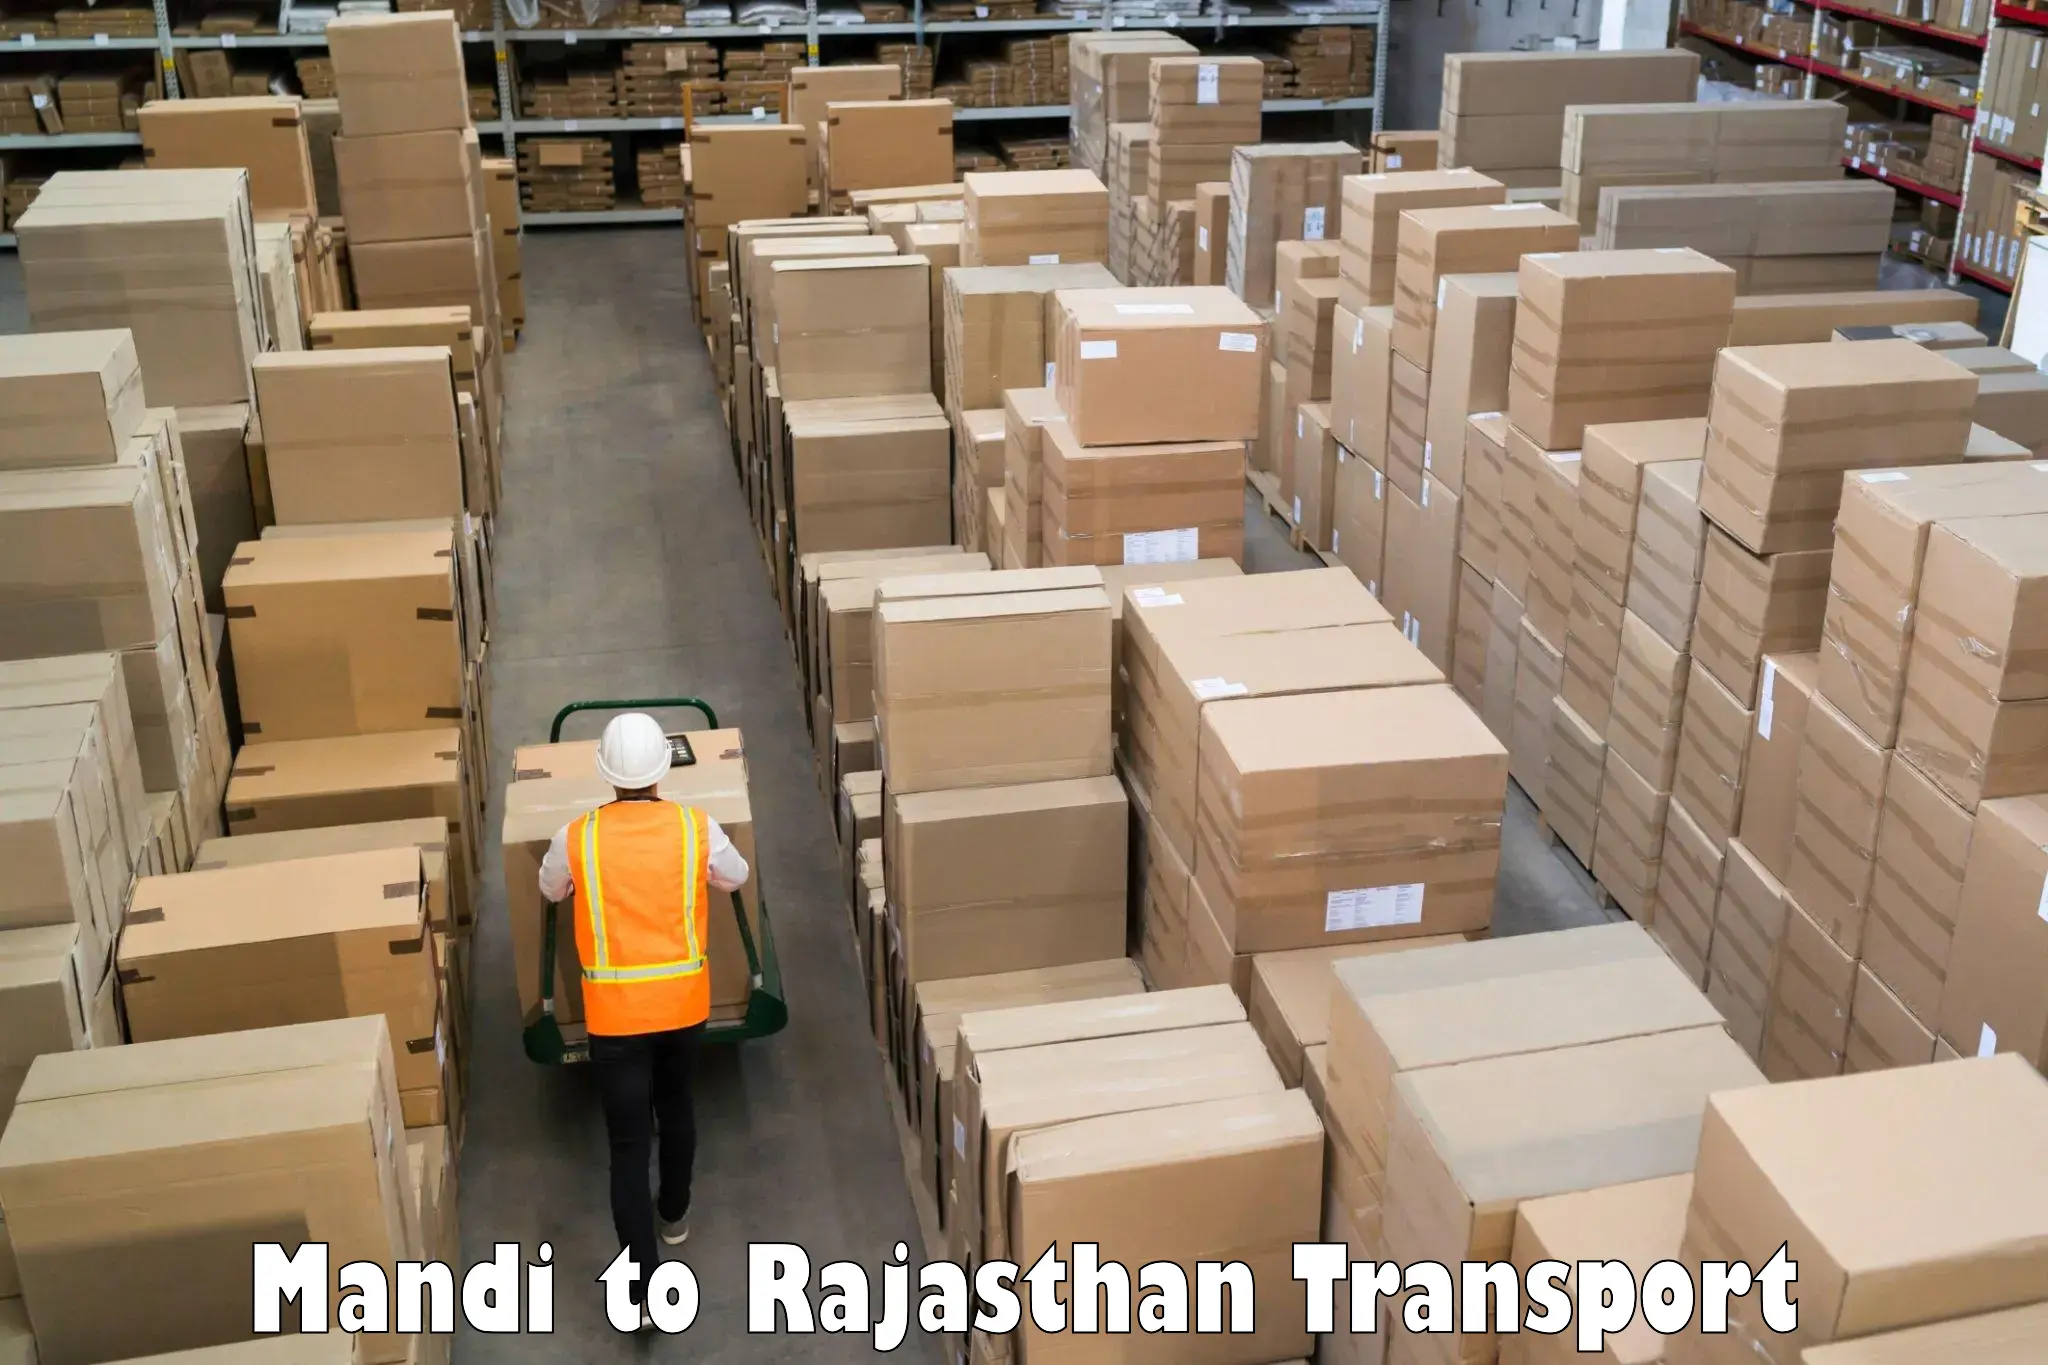 Online transport service Mandi to Jaipur